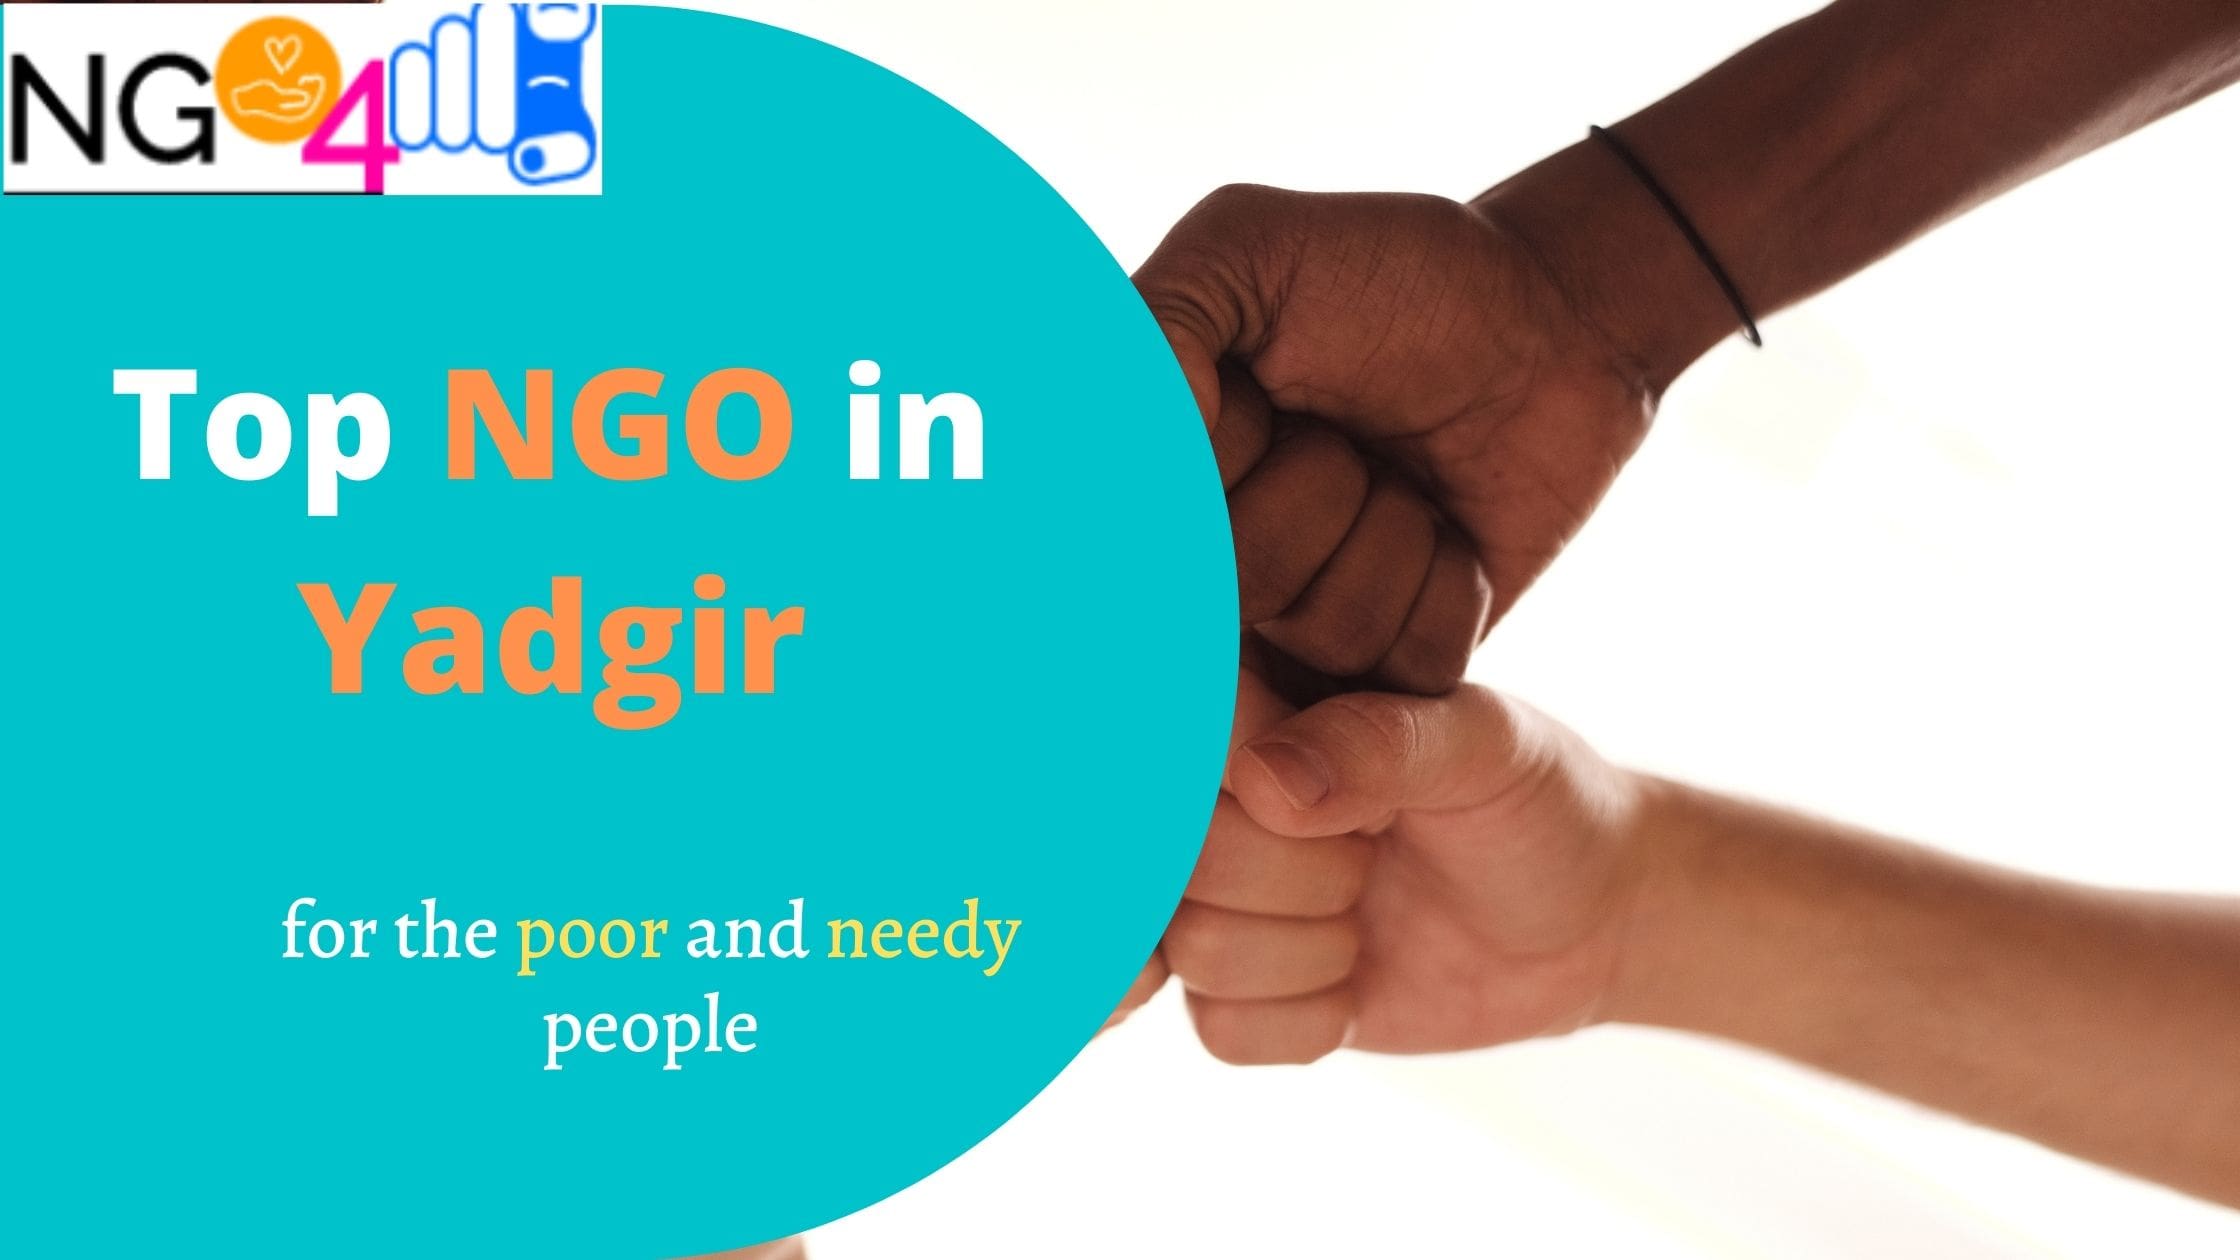 NGOs in Yadgir